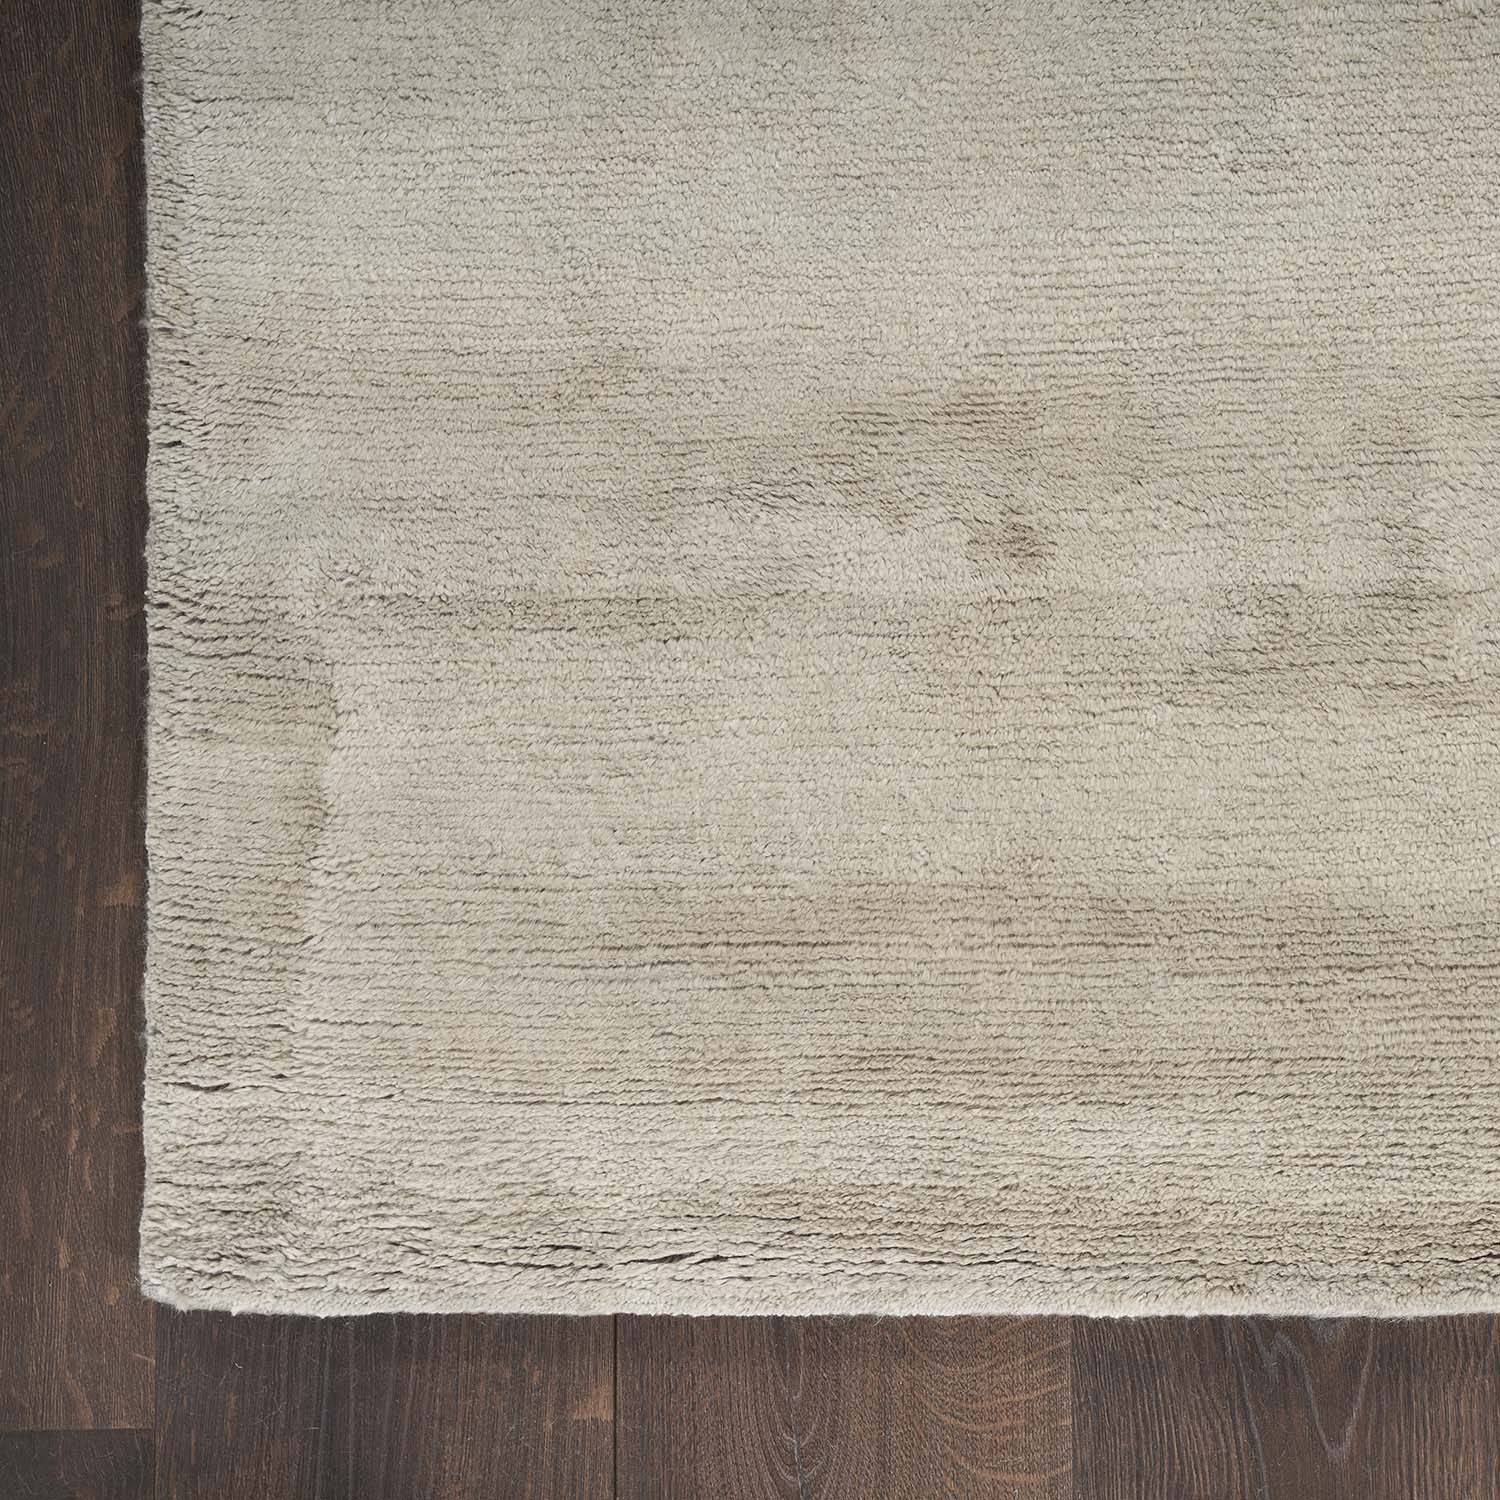 Top-down view of a plush beige area rug on dark hardwood flooring.